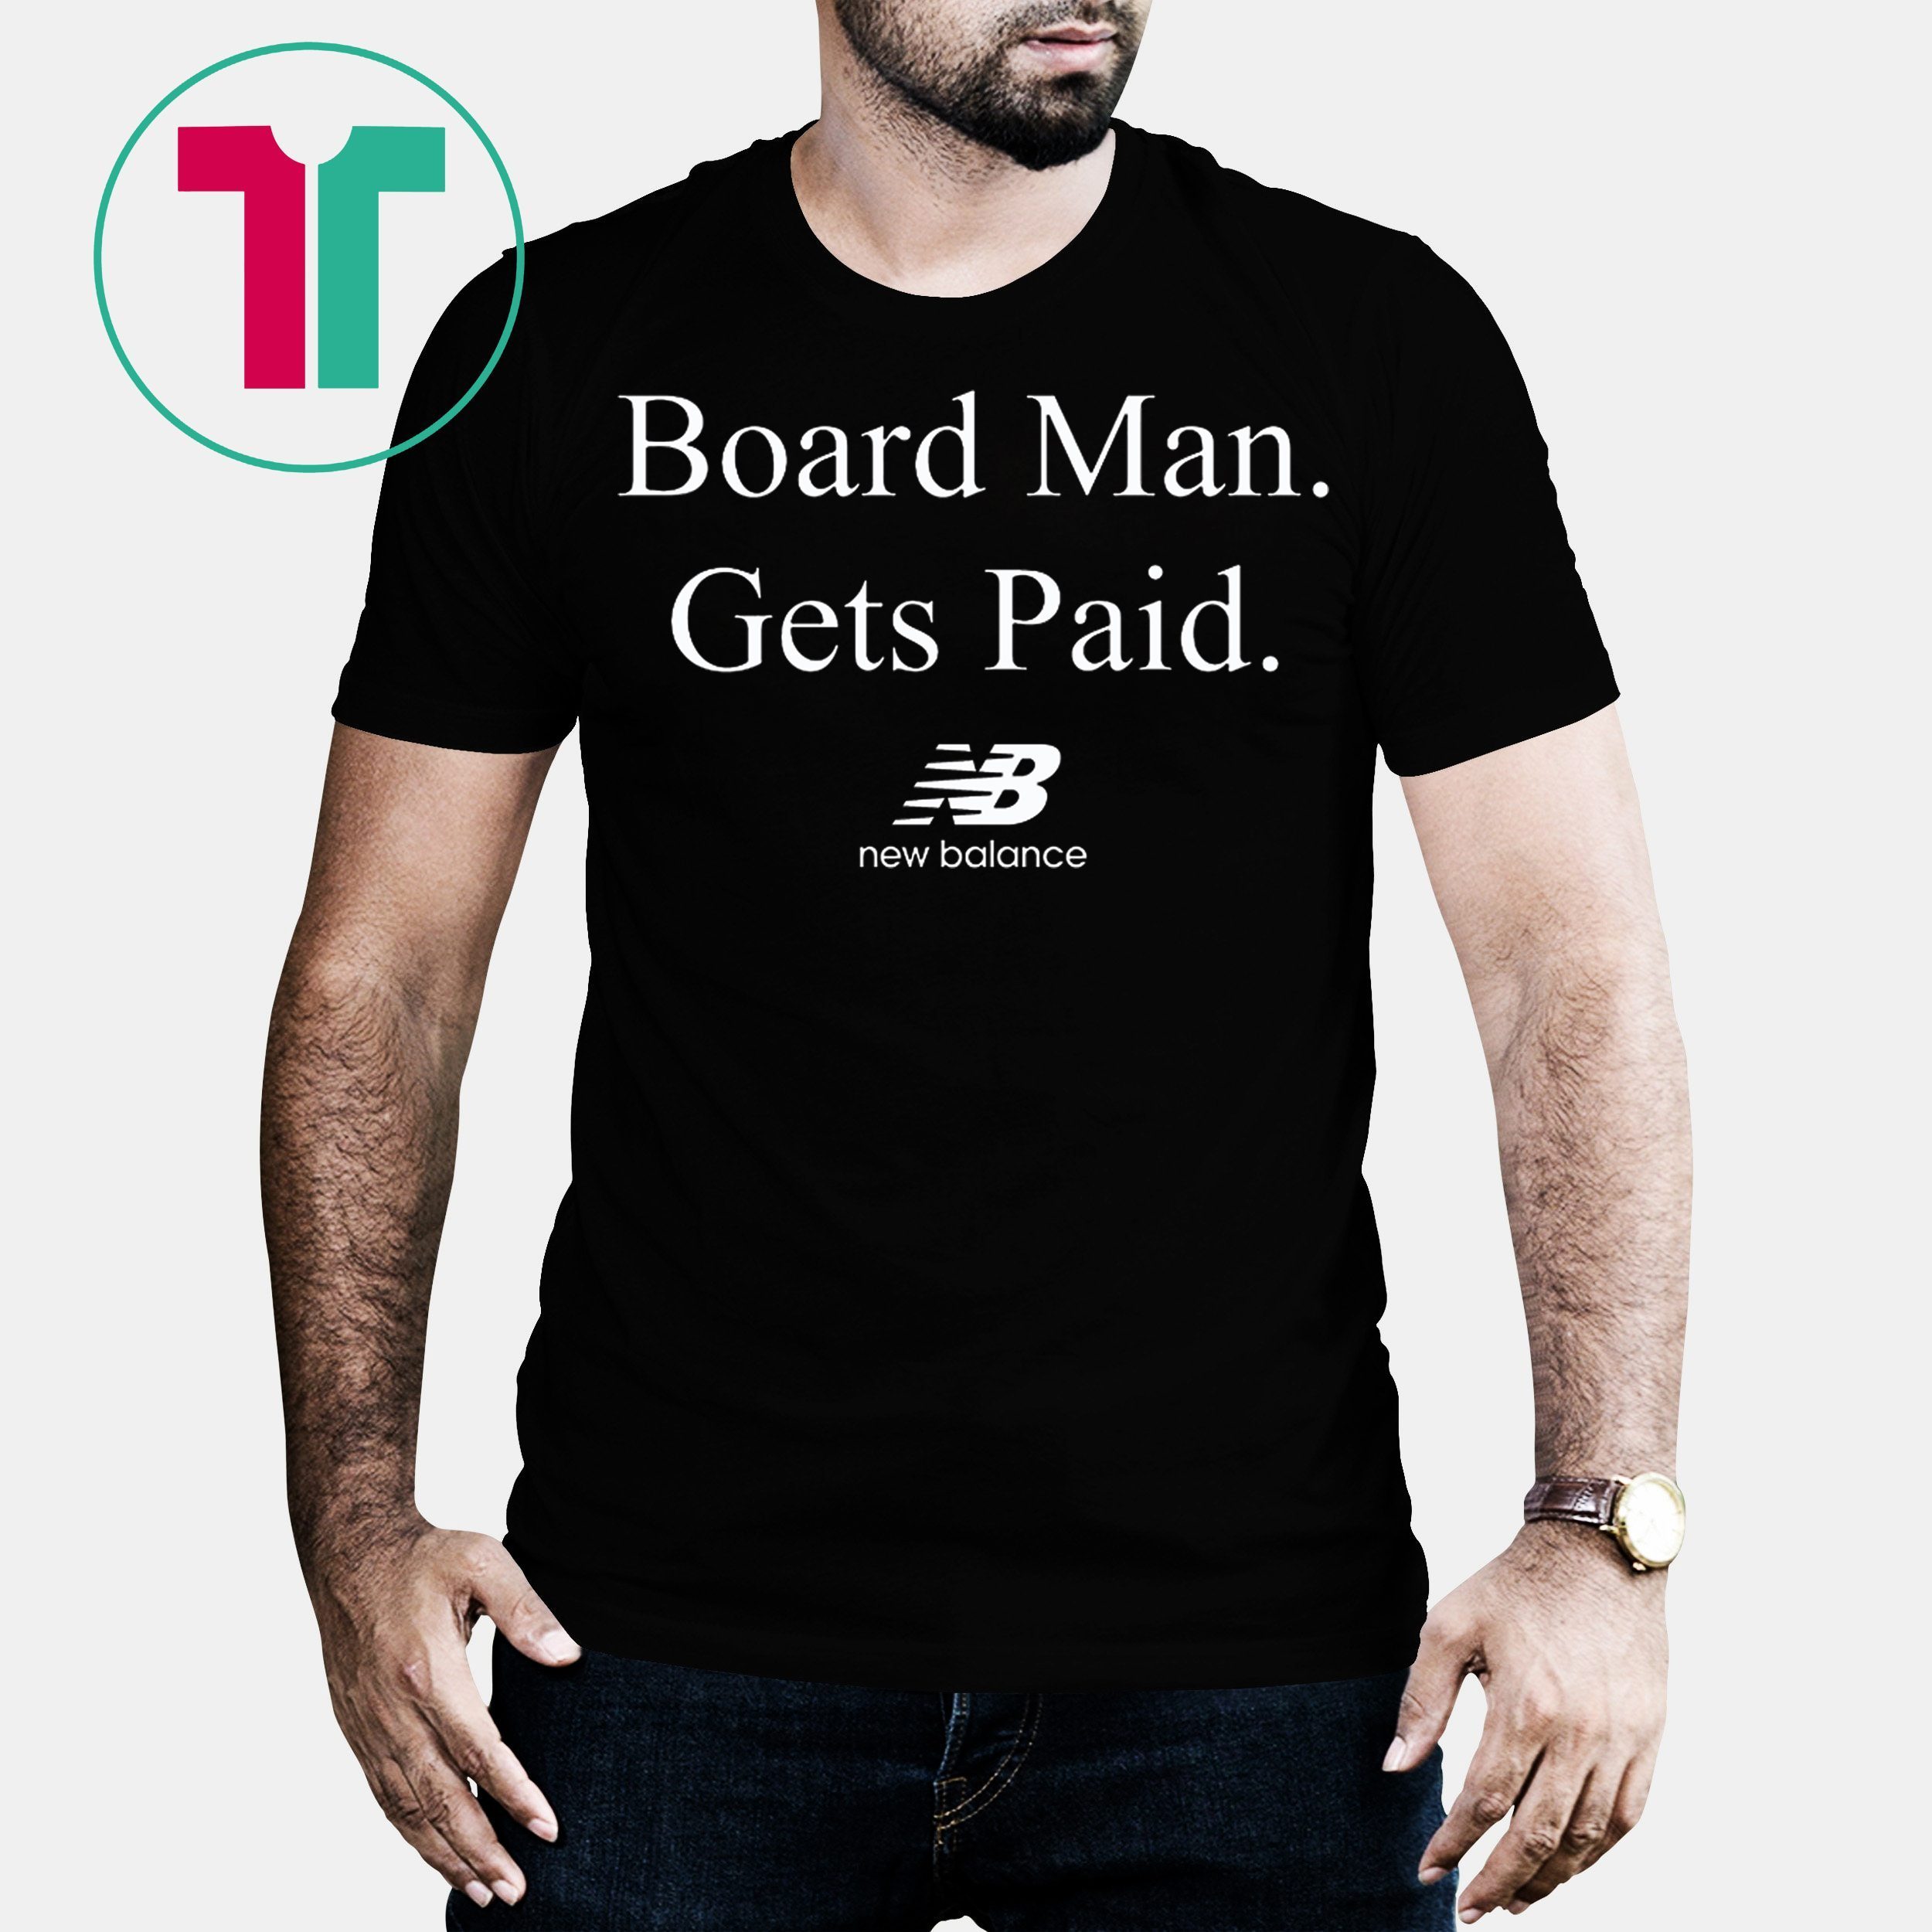 new balance boardman gets paid shirt